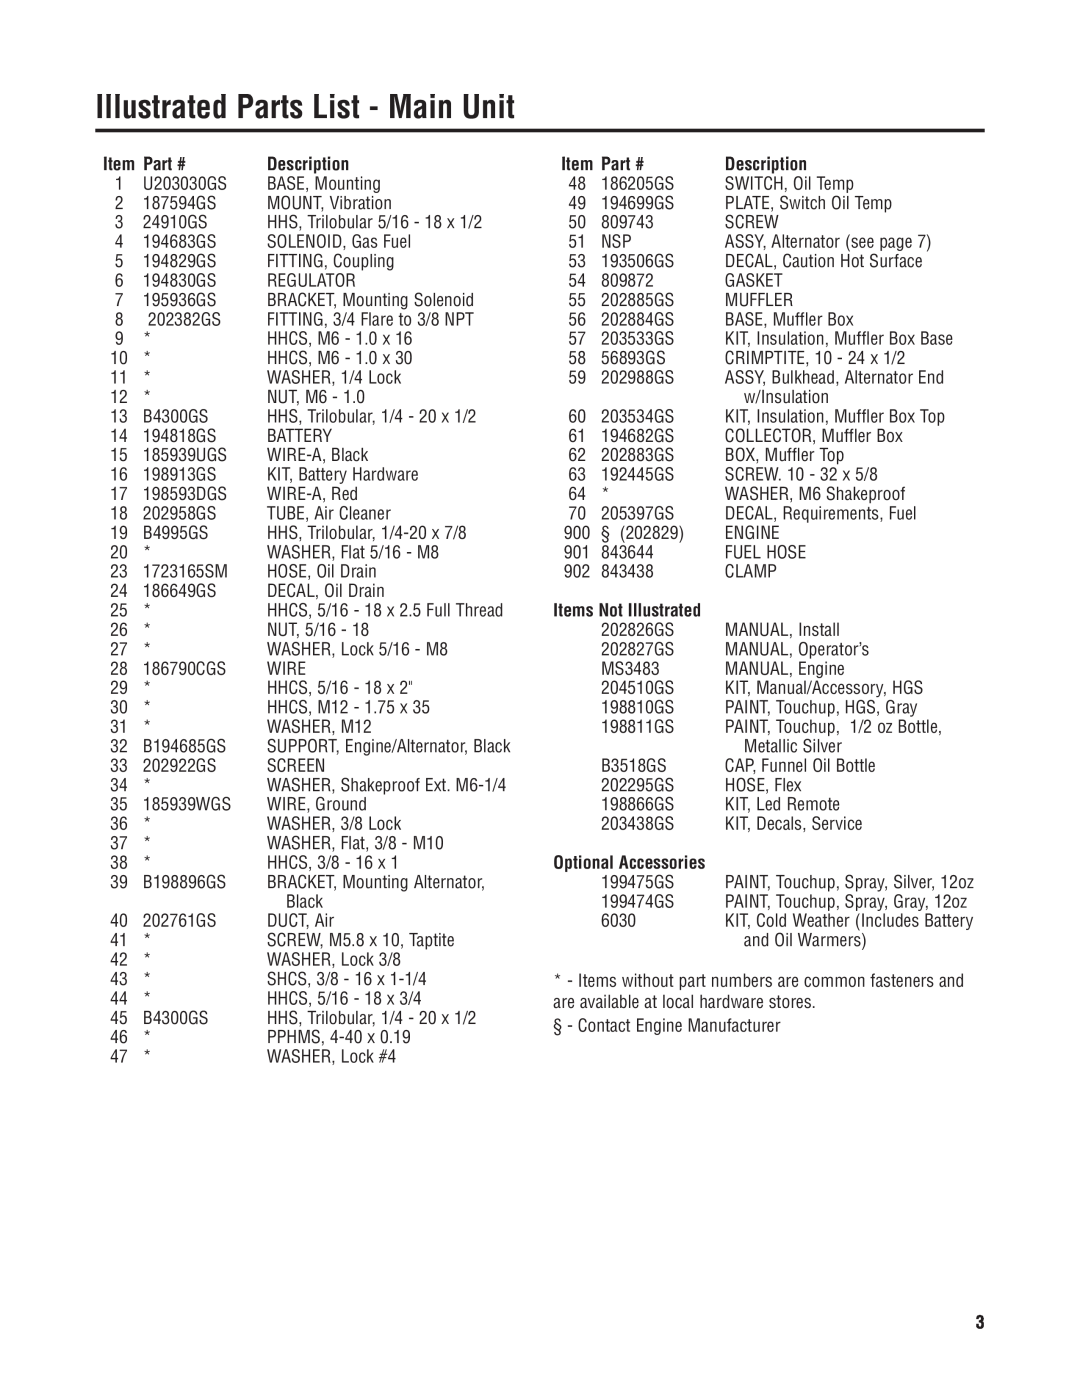 Briggs & Stratton 040226-1 manual Illustrated Parts List - Main Unit, Description, Items Not Illustrated 